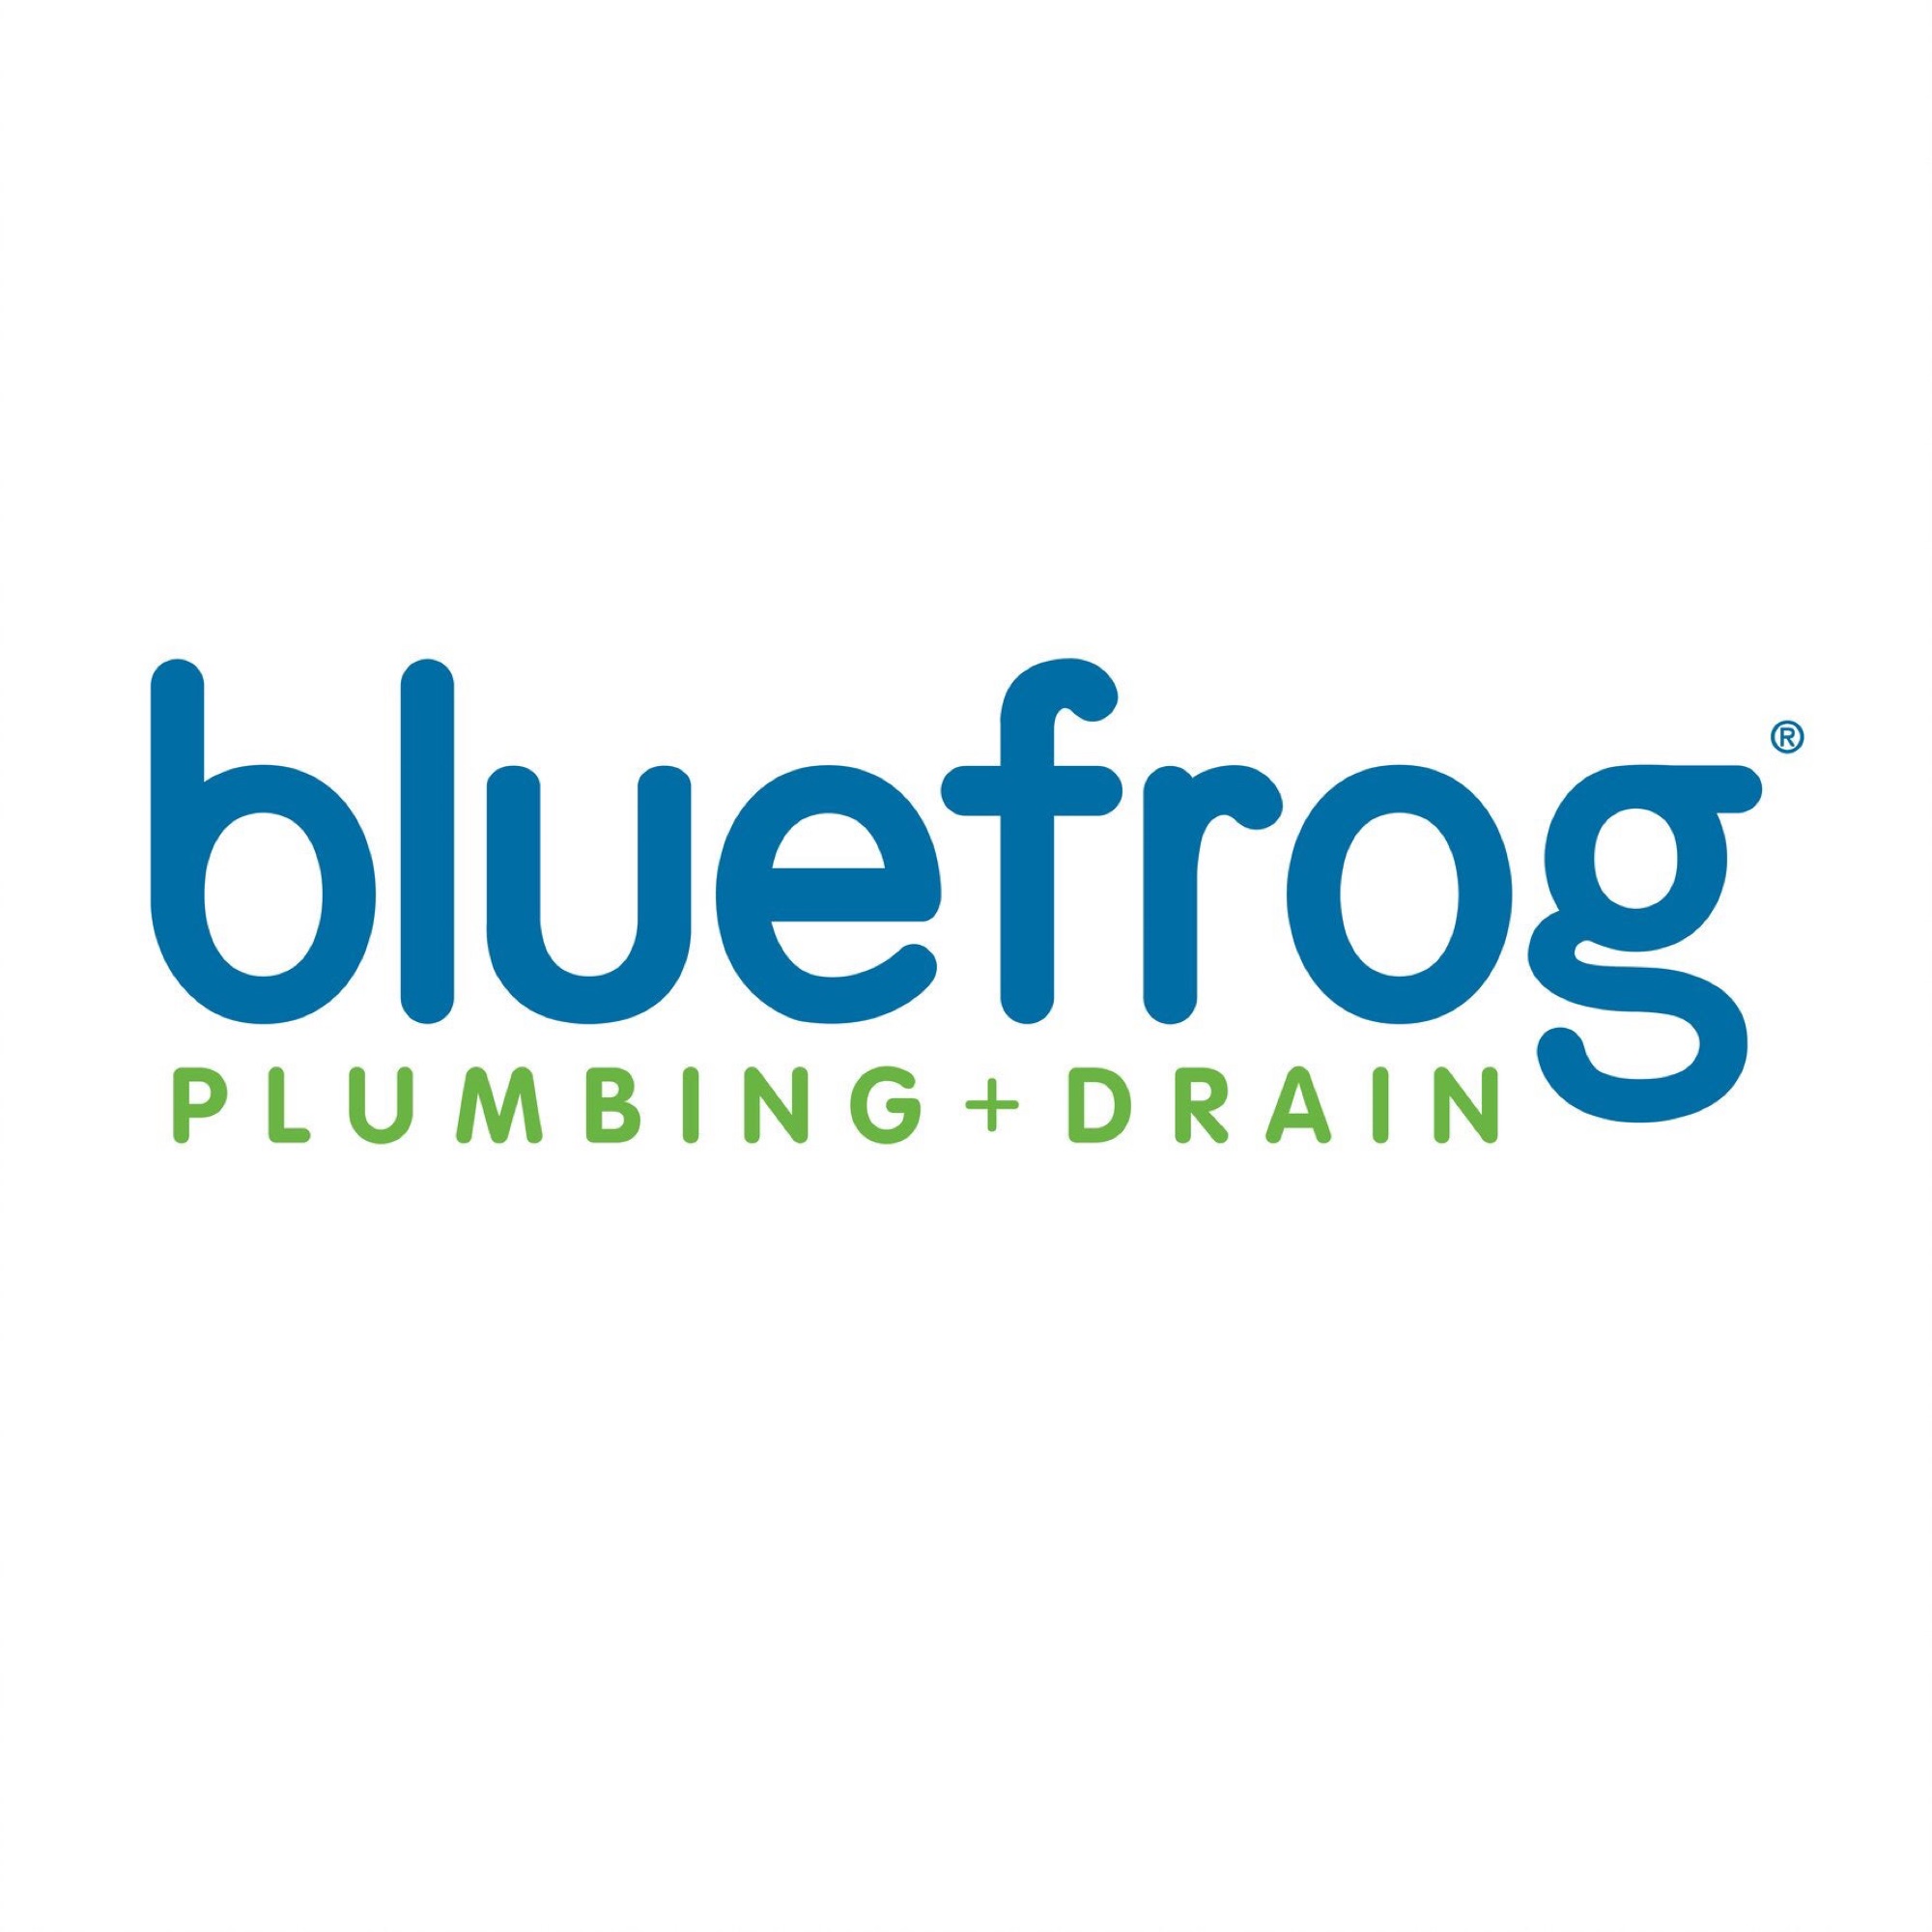 Bluefrog Plumbing + Drain Logo